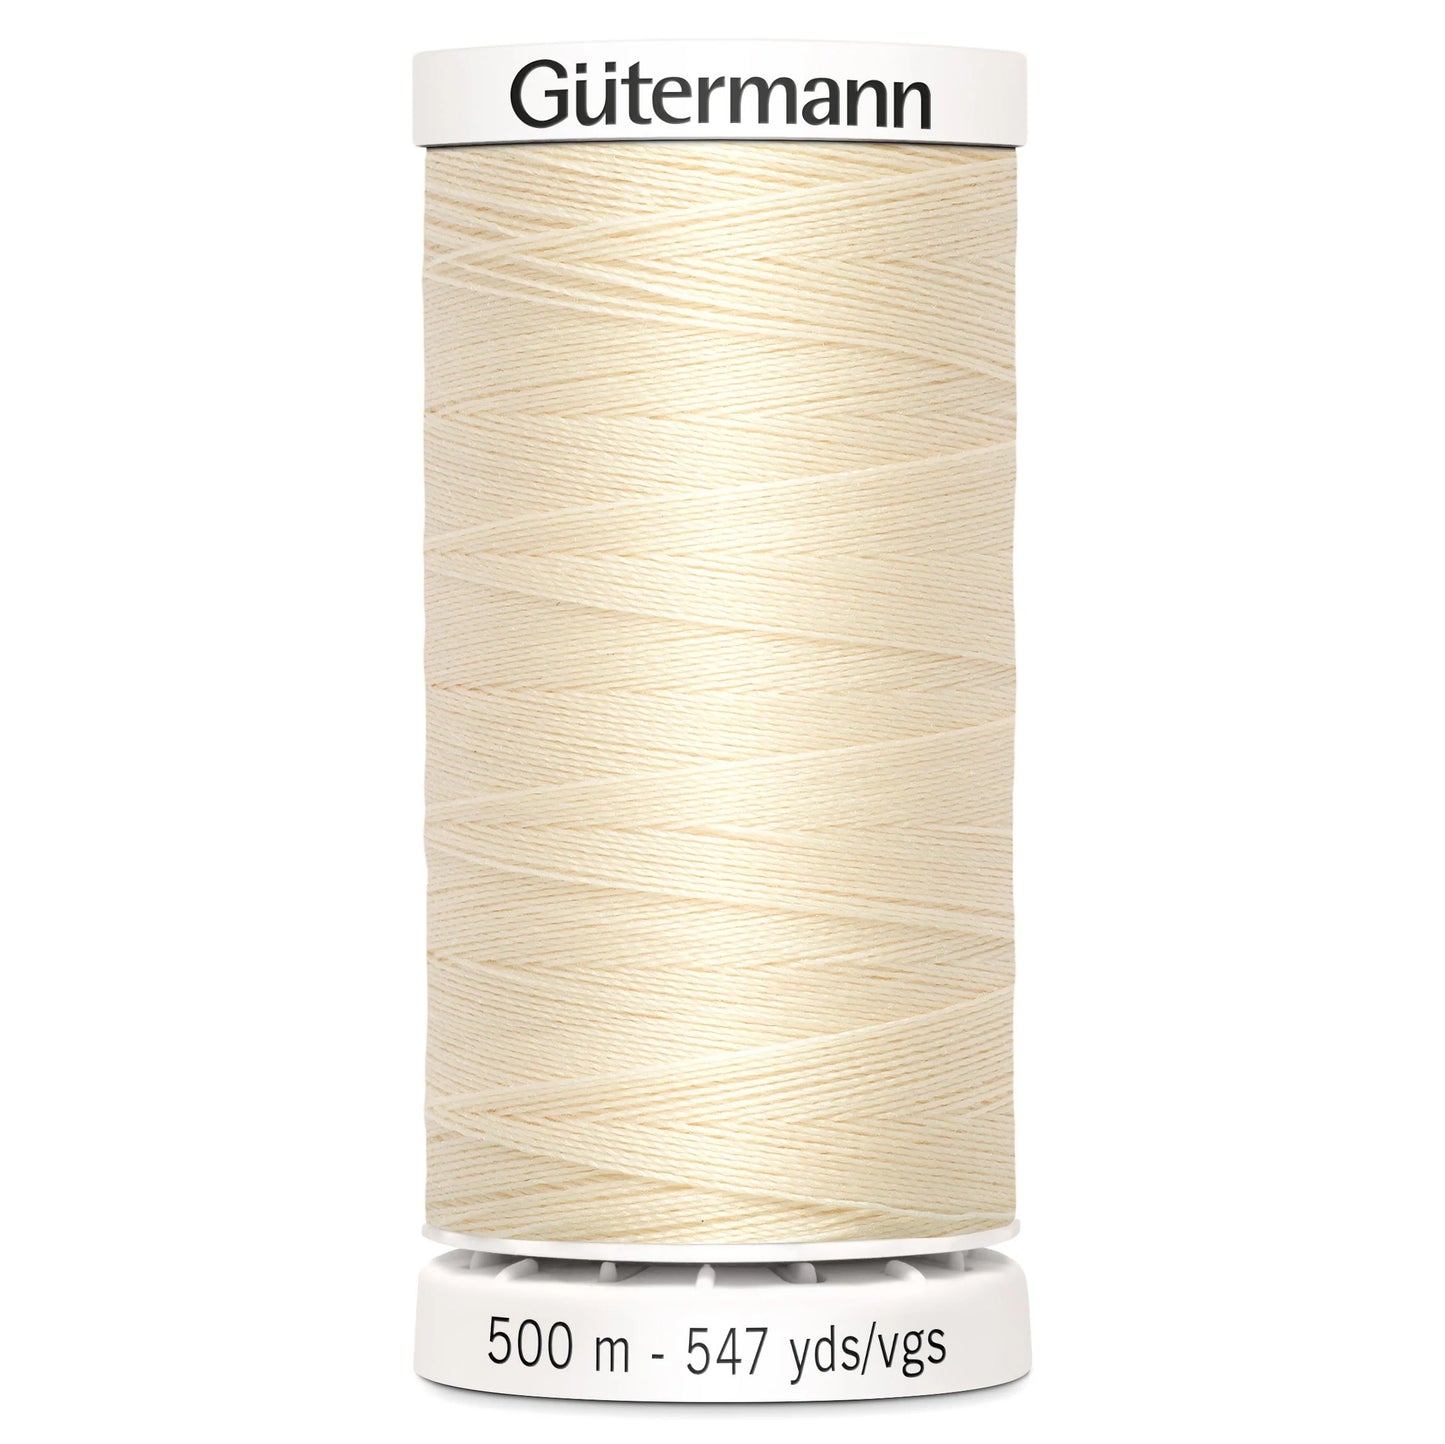 414 Gutermann Sew All Thread 500m - Cream